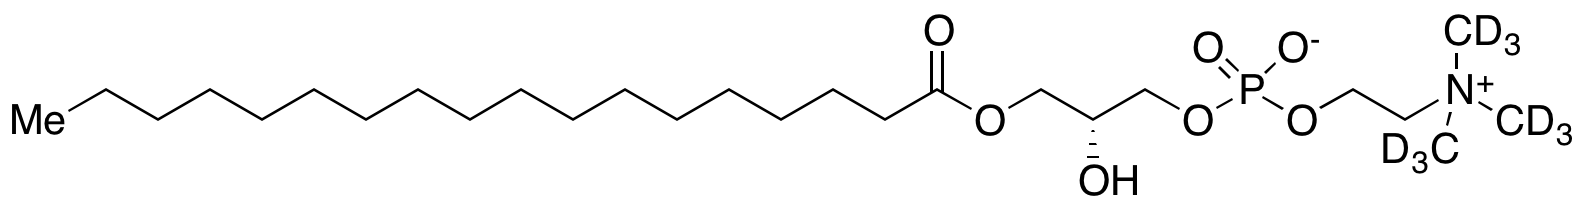 Stearoyl L-α-Lysolecithin-d9